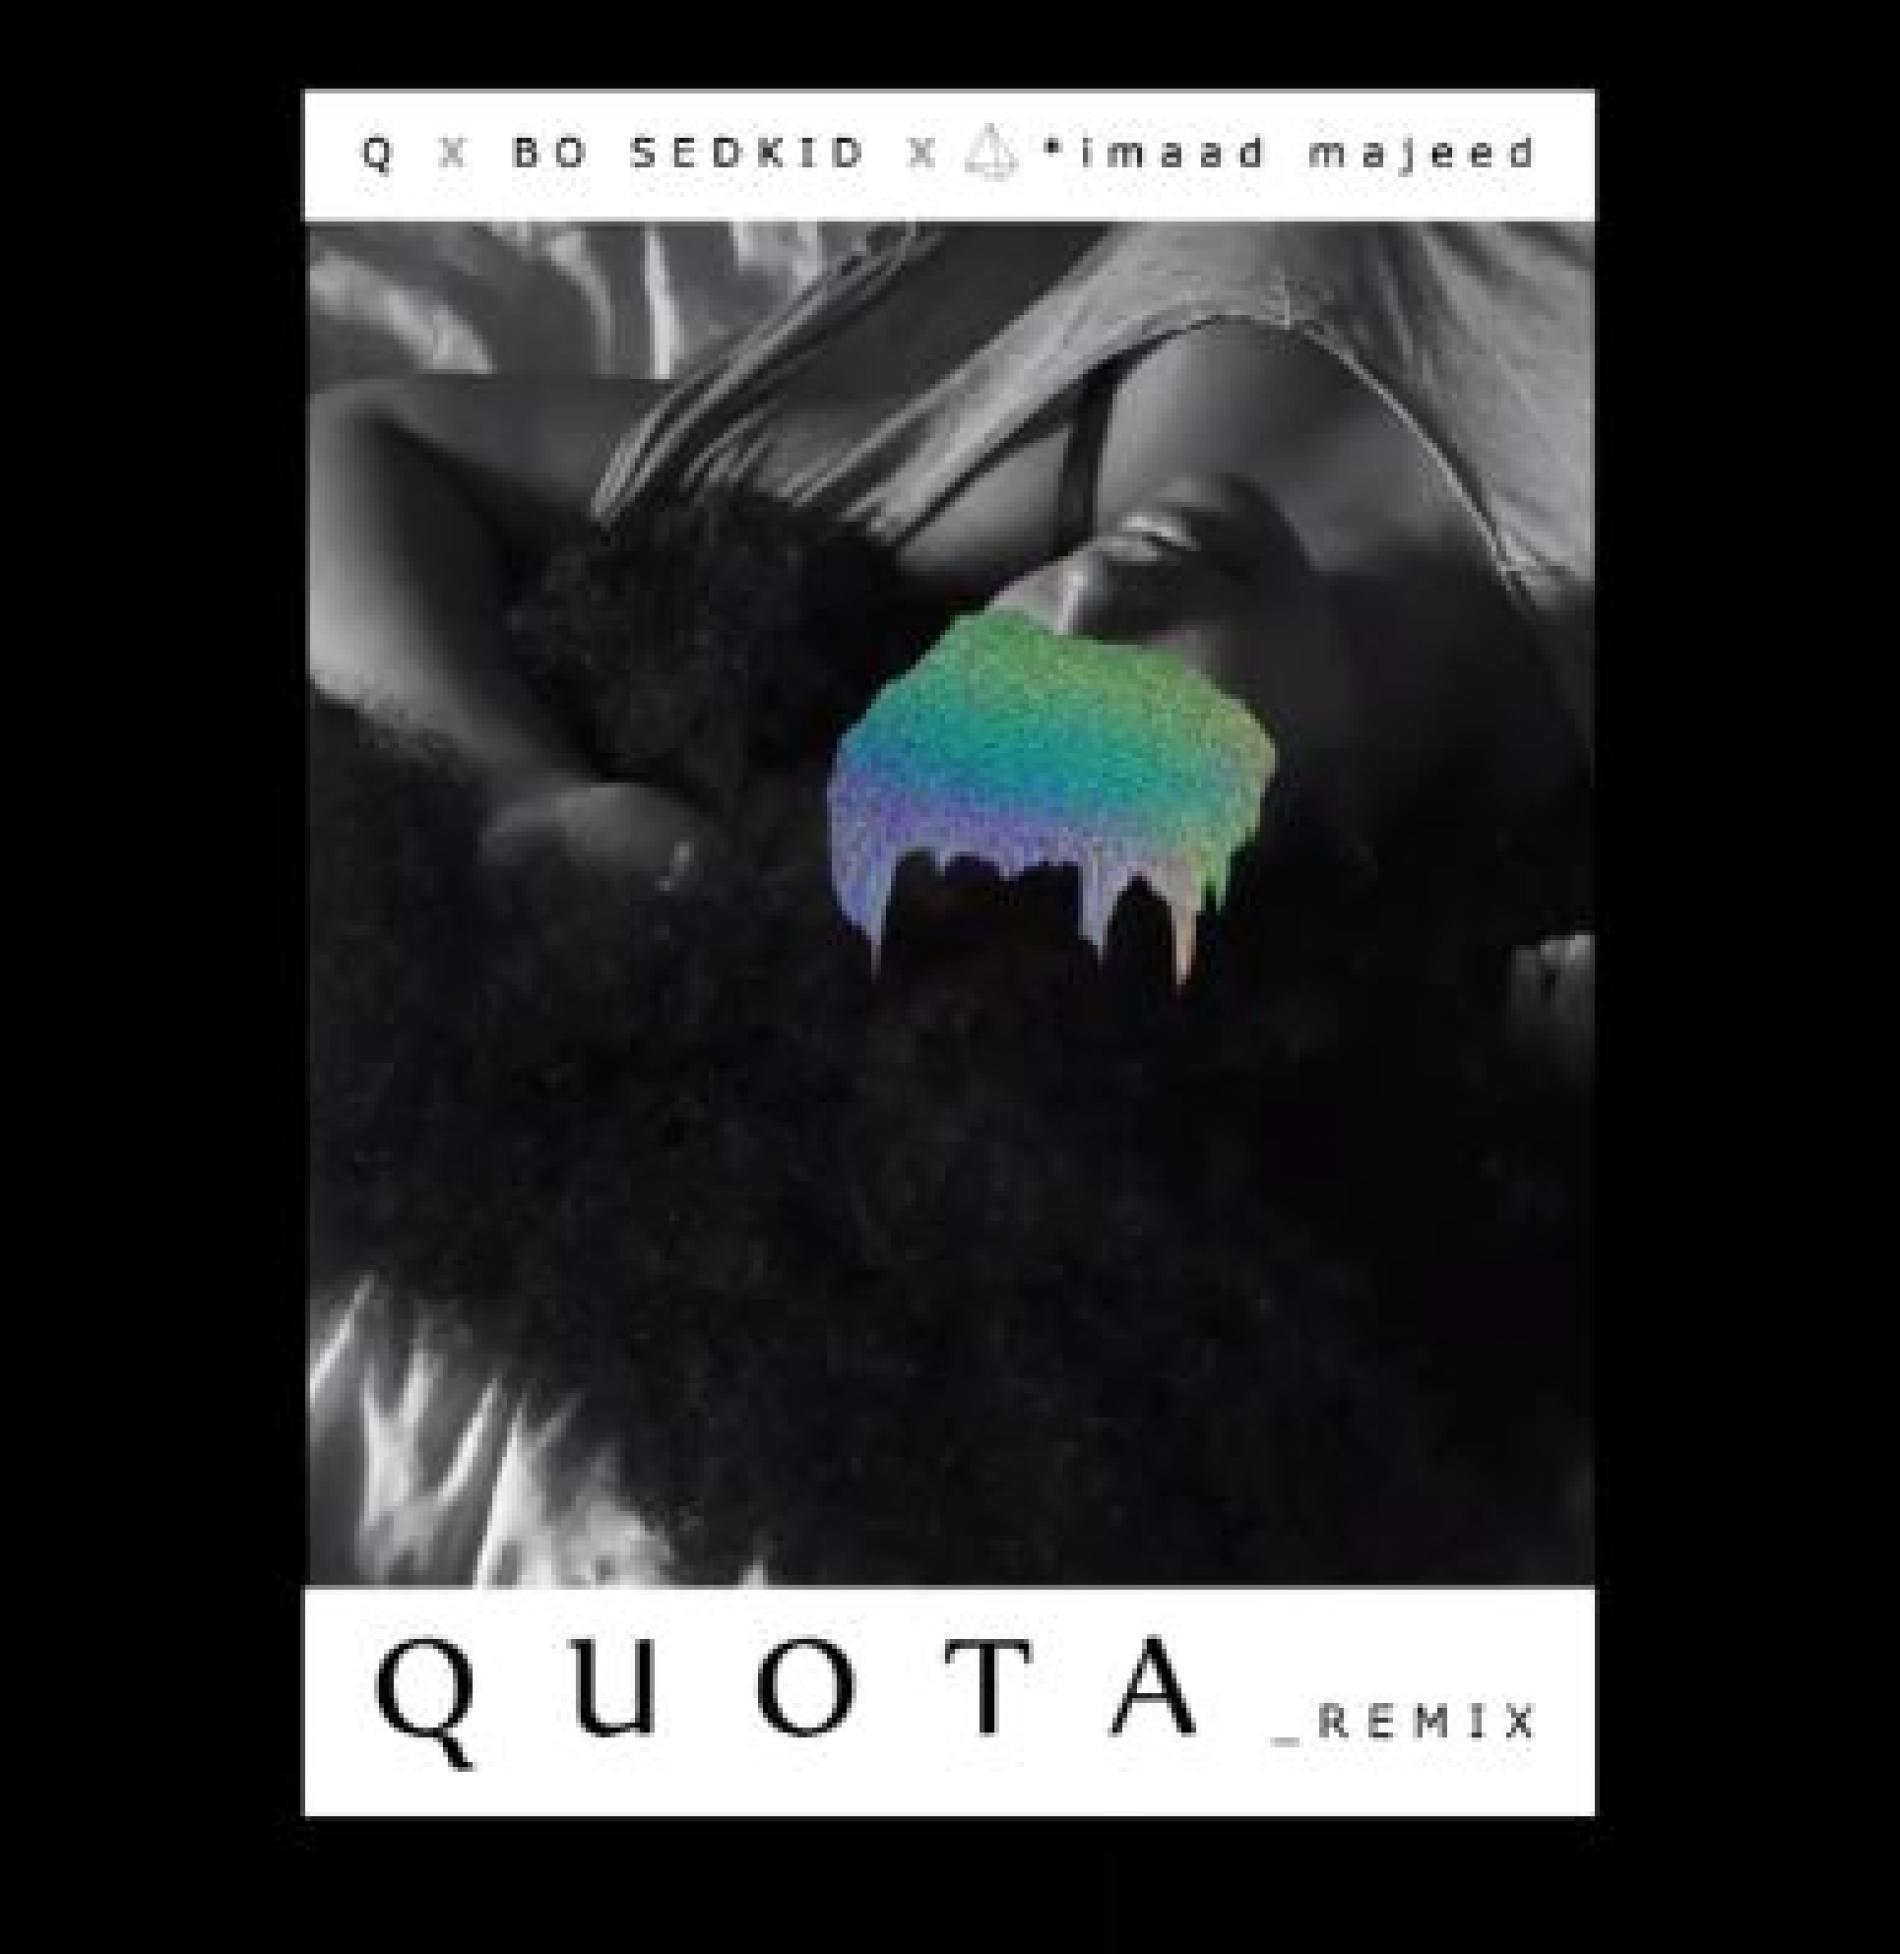 Q x Bo Sedkid x Imaad Majeed – Quota [Remix]